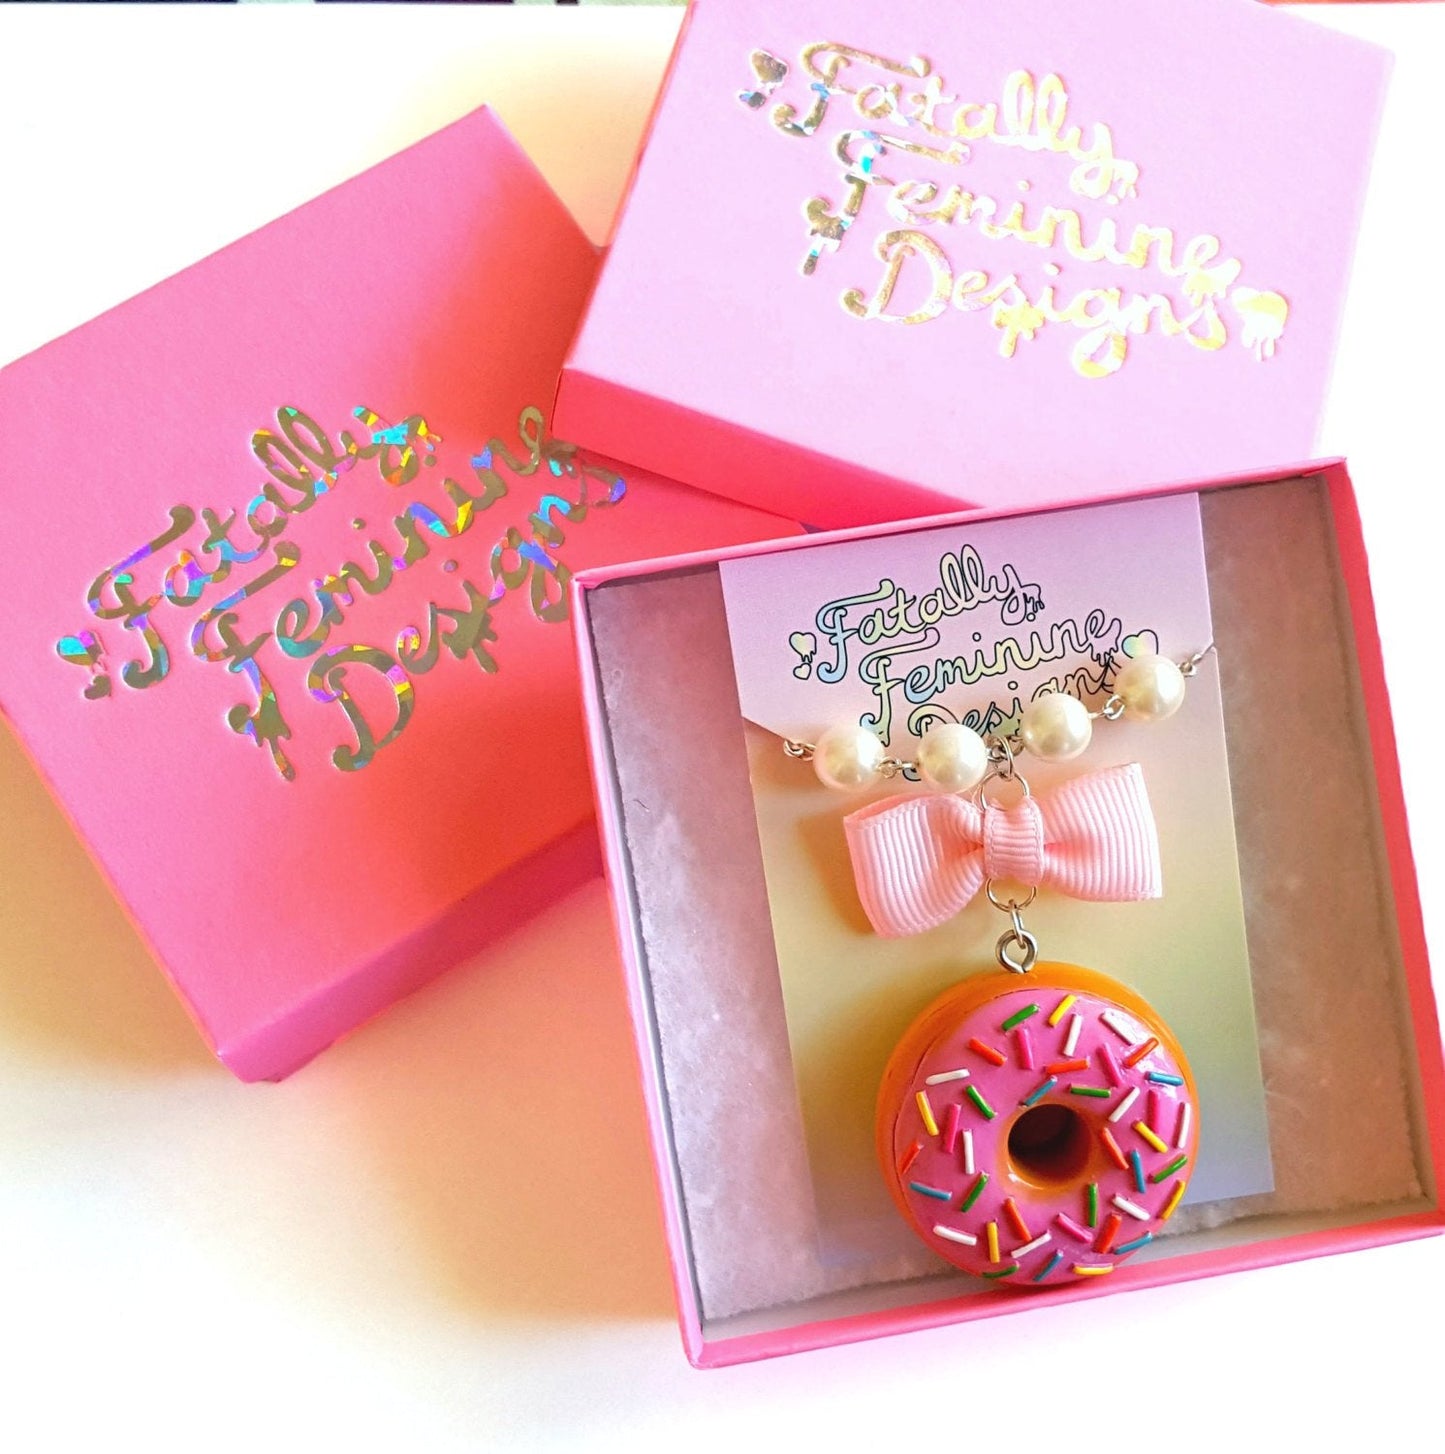 Candy Heart Statement Necklace - Valentine's Day Conversation Charm Jewelry - Fatally Feminine Designs